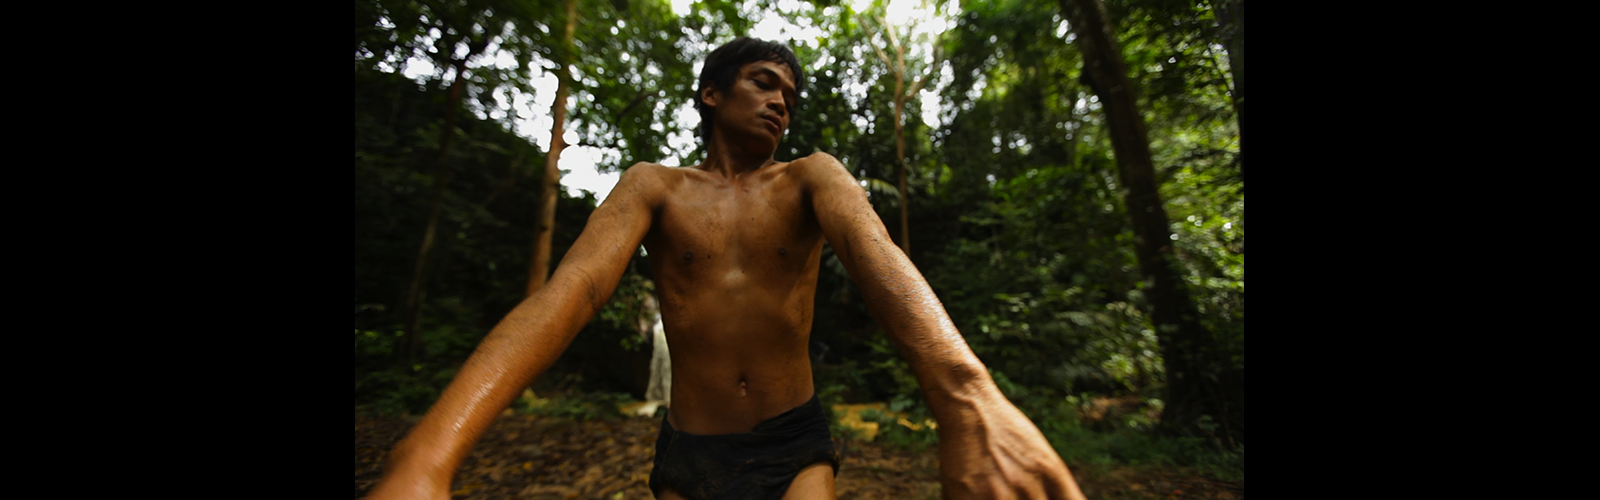 Man dancing in jungle with no shirt